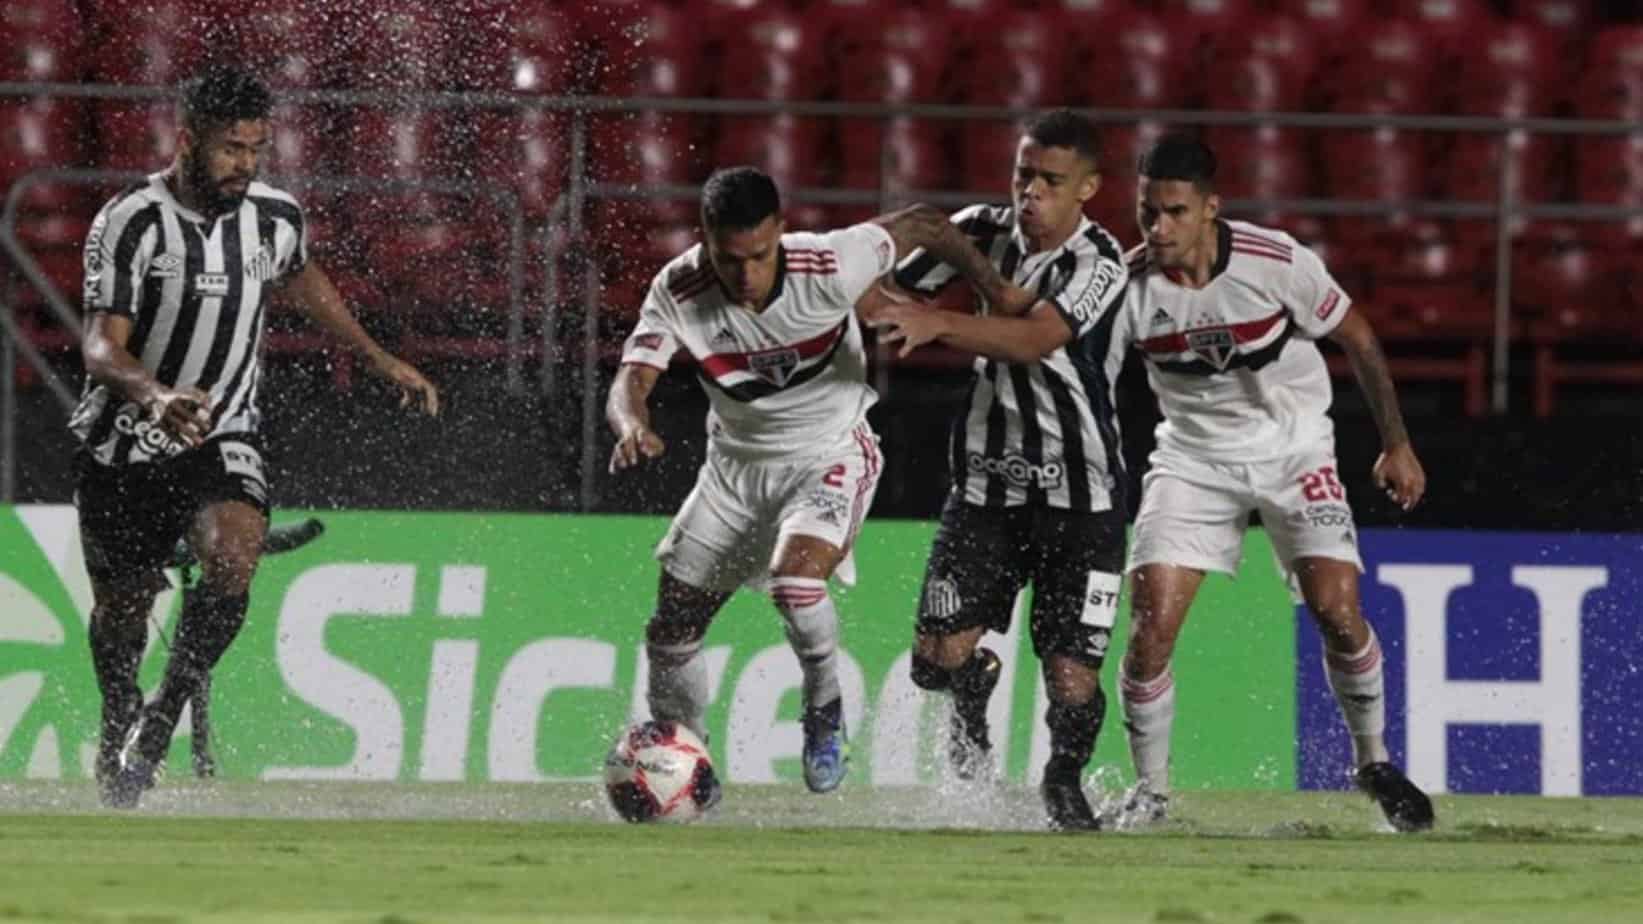 São Paulo vs. Santos Preview and Betting Odds